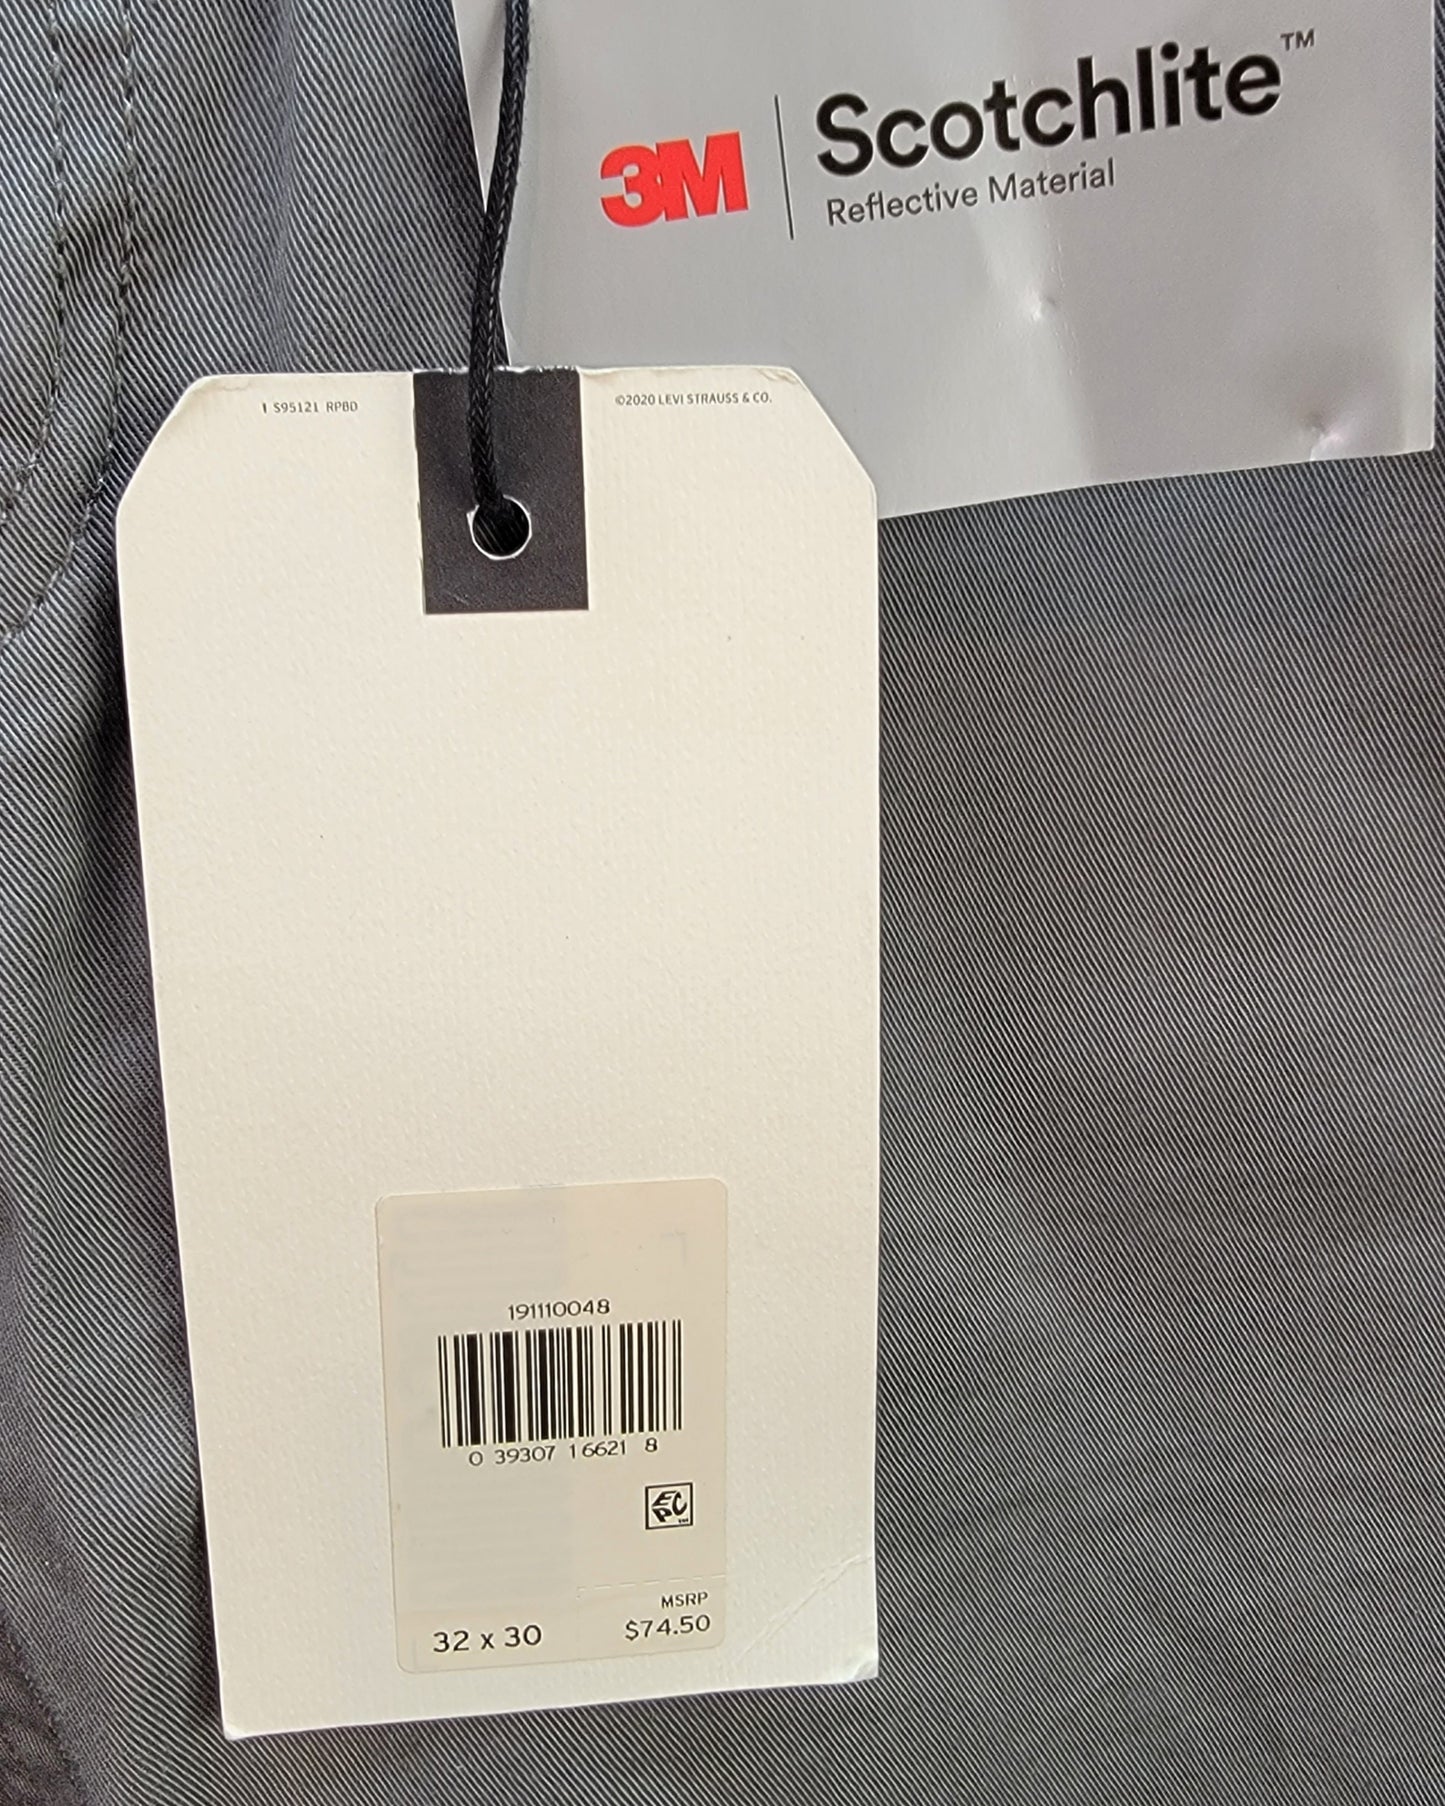 Levi's Men's Premium 511™ Size W32 L30 Color: Medium Gray Retail $74.50 New with Tags